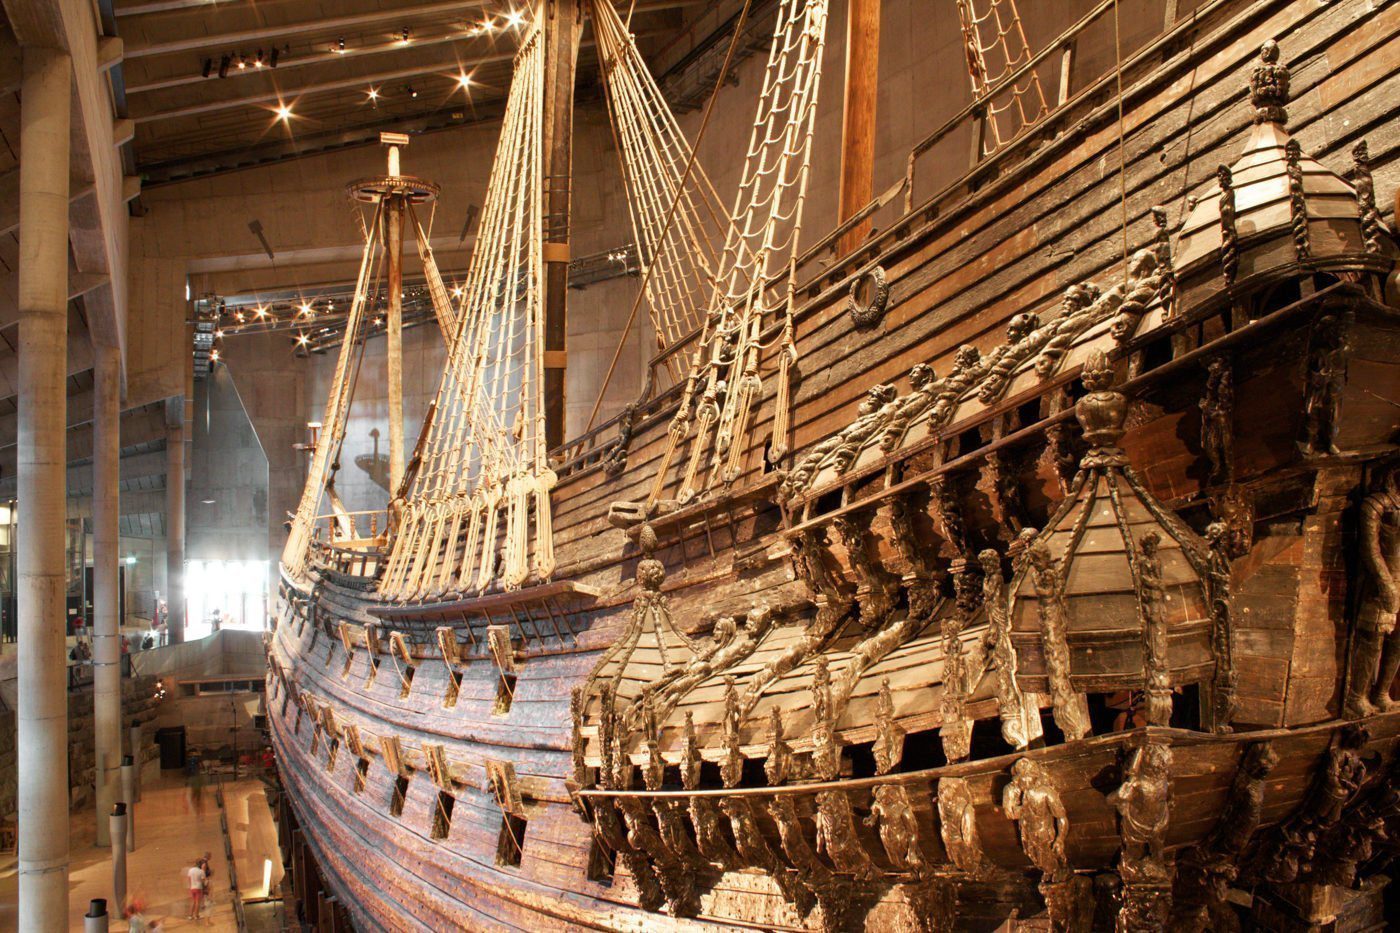 The incredible Vasa in Stockholm, Sweden